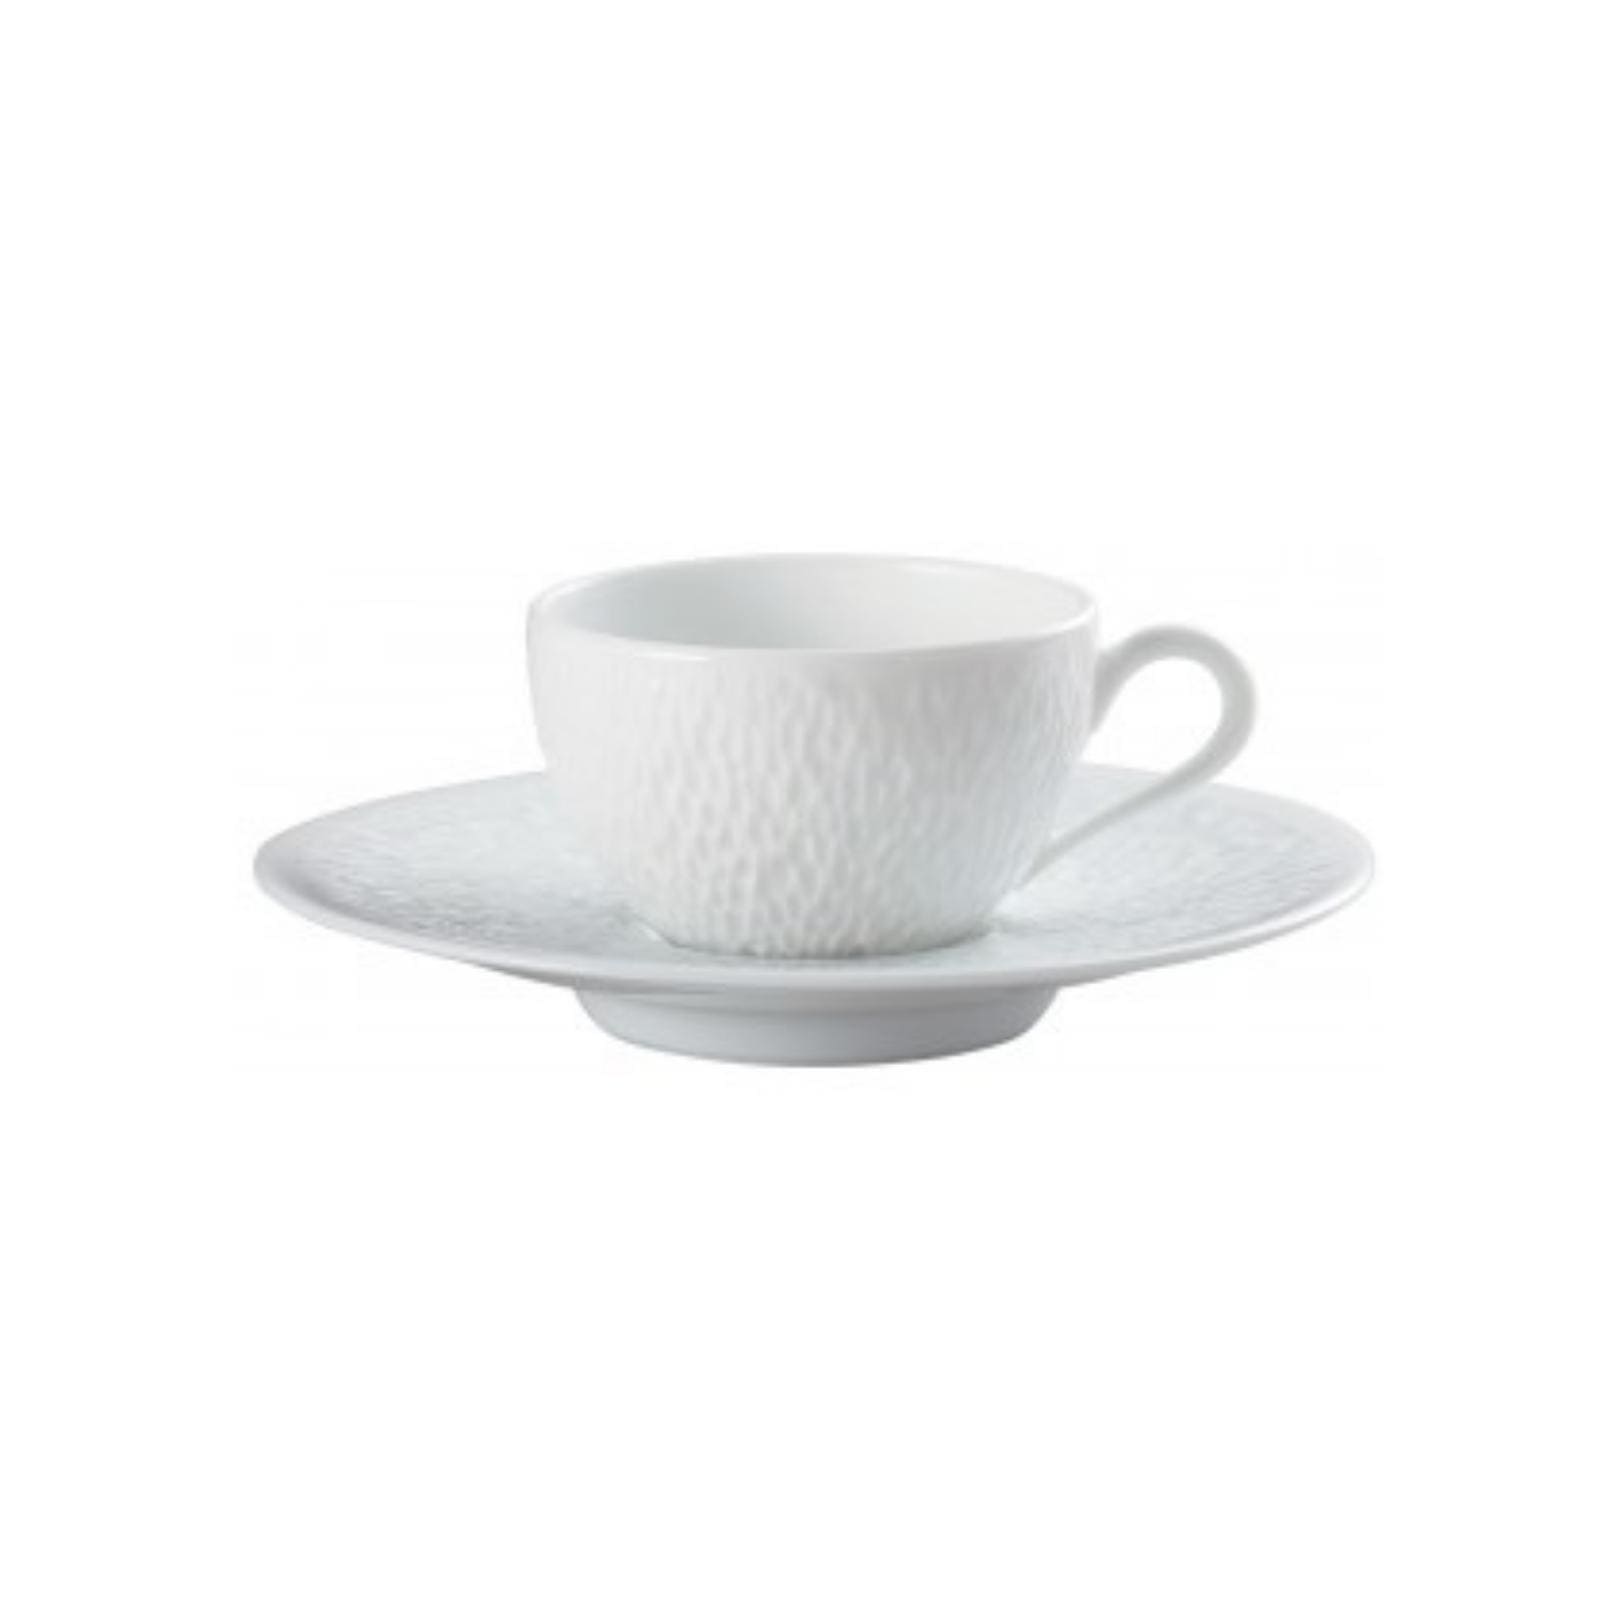 Tea cup extra / Chinese soup bowl saucer 17.5 cm Minéral Raynaud